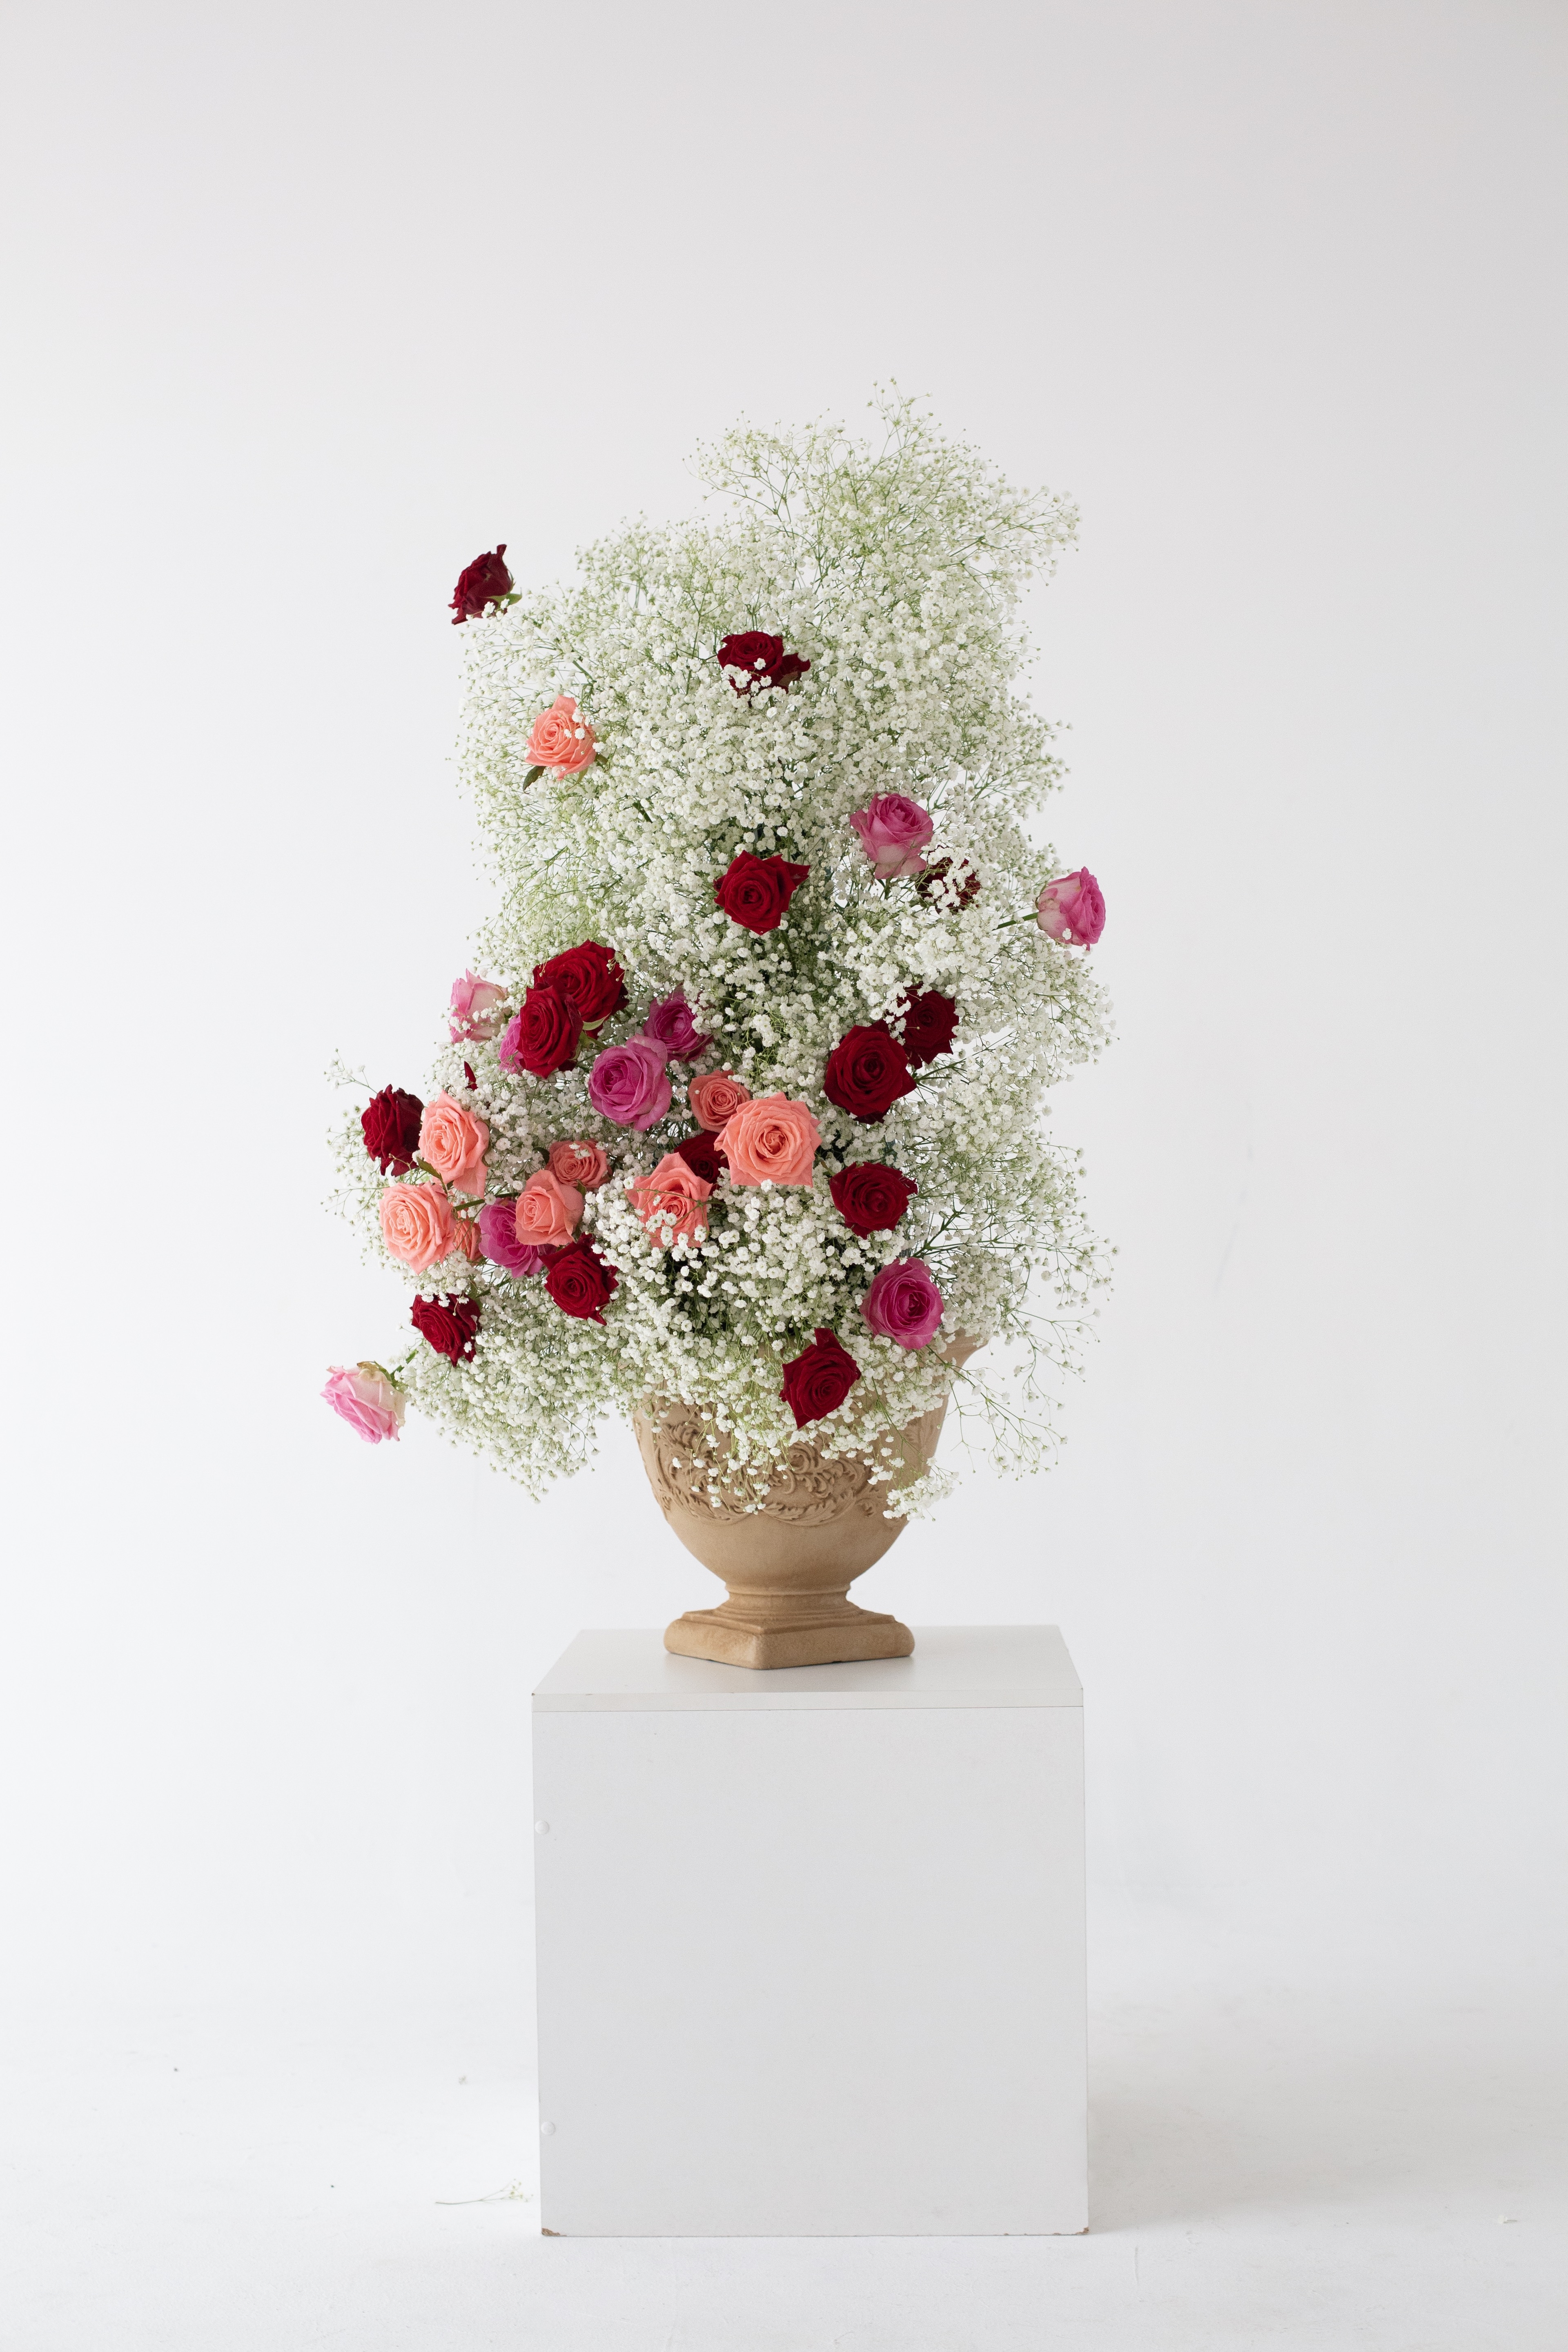 Фото бесплатно ваза, букет цветов, ваза с цветами